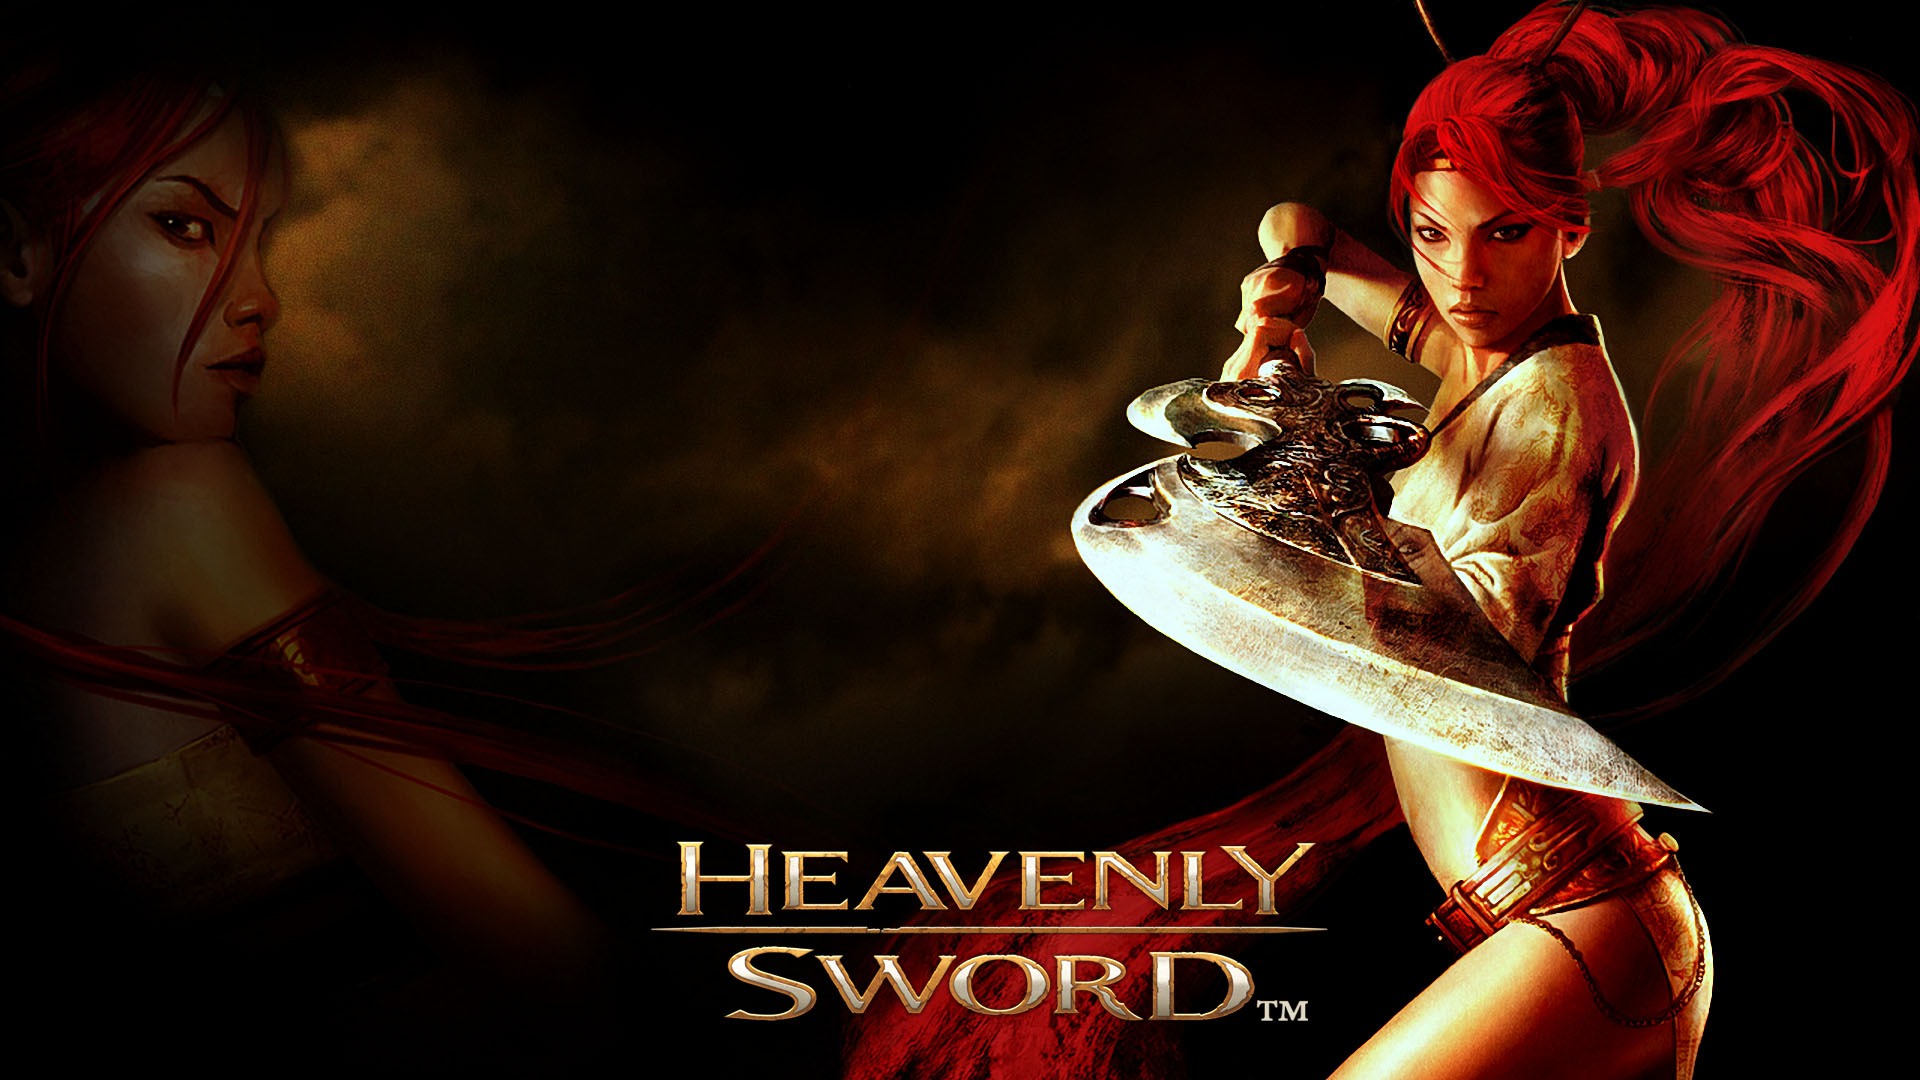 Heavenly Sword Wallpaper HD